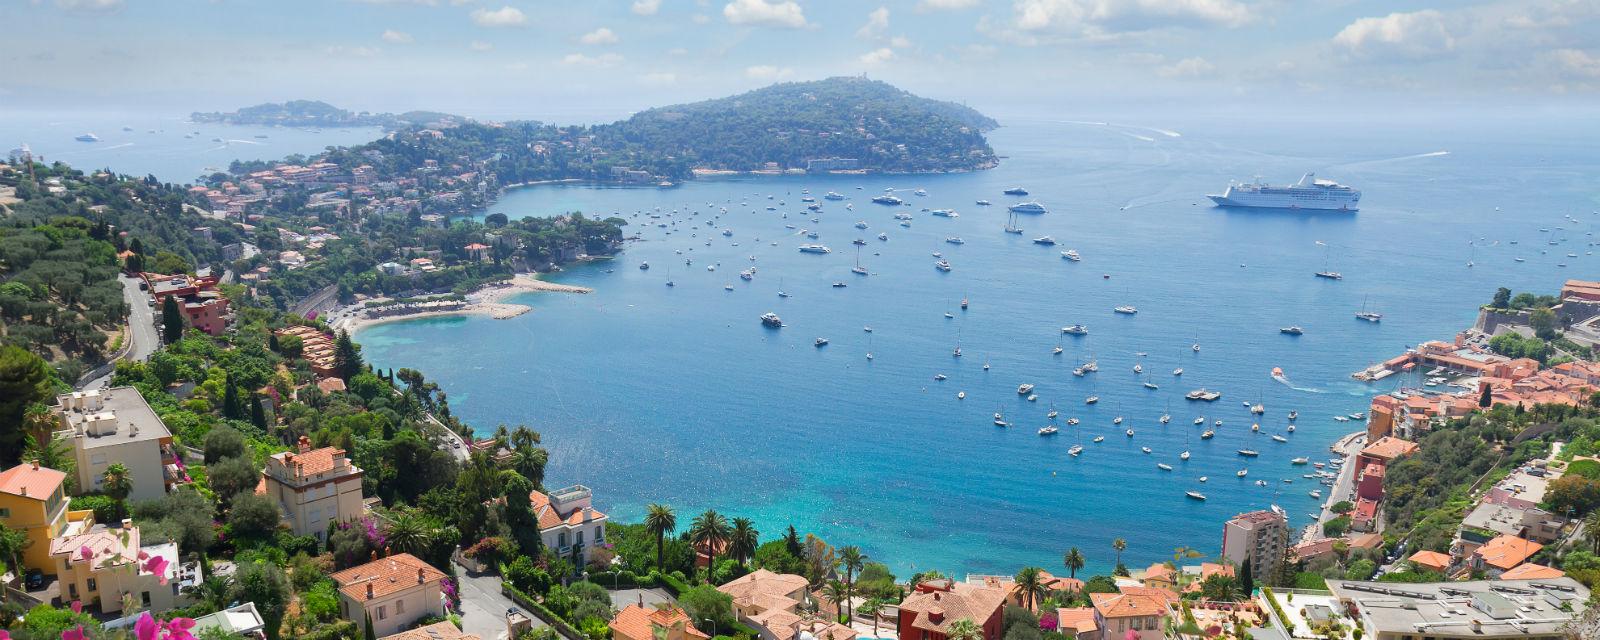 Côte d'Azur Rental | French Riviera Villa Holidays 2022 | Travels